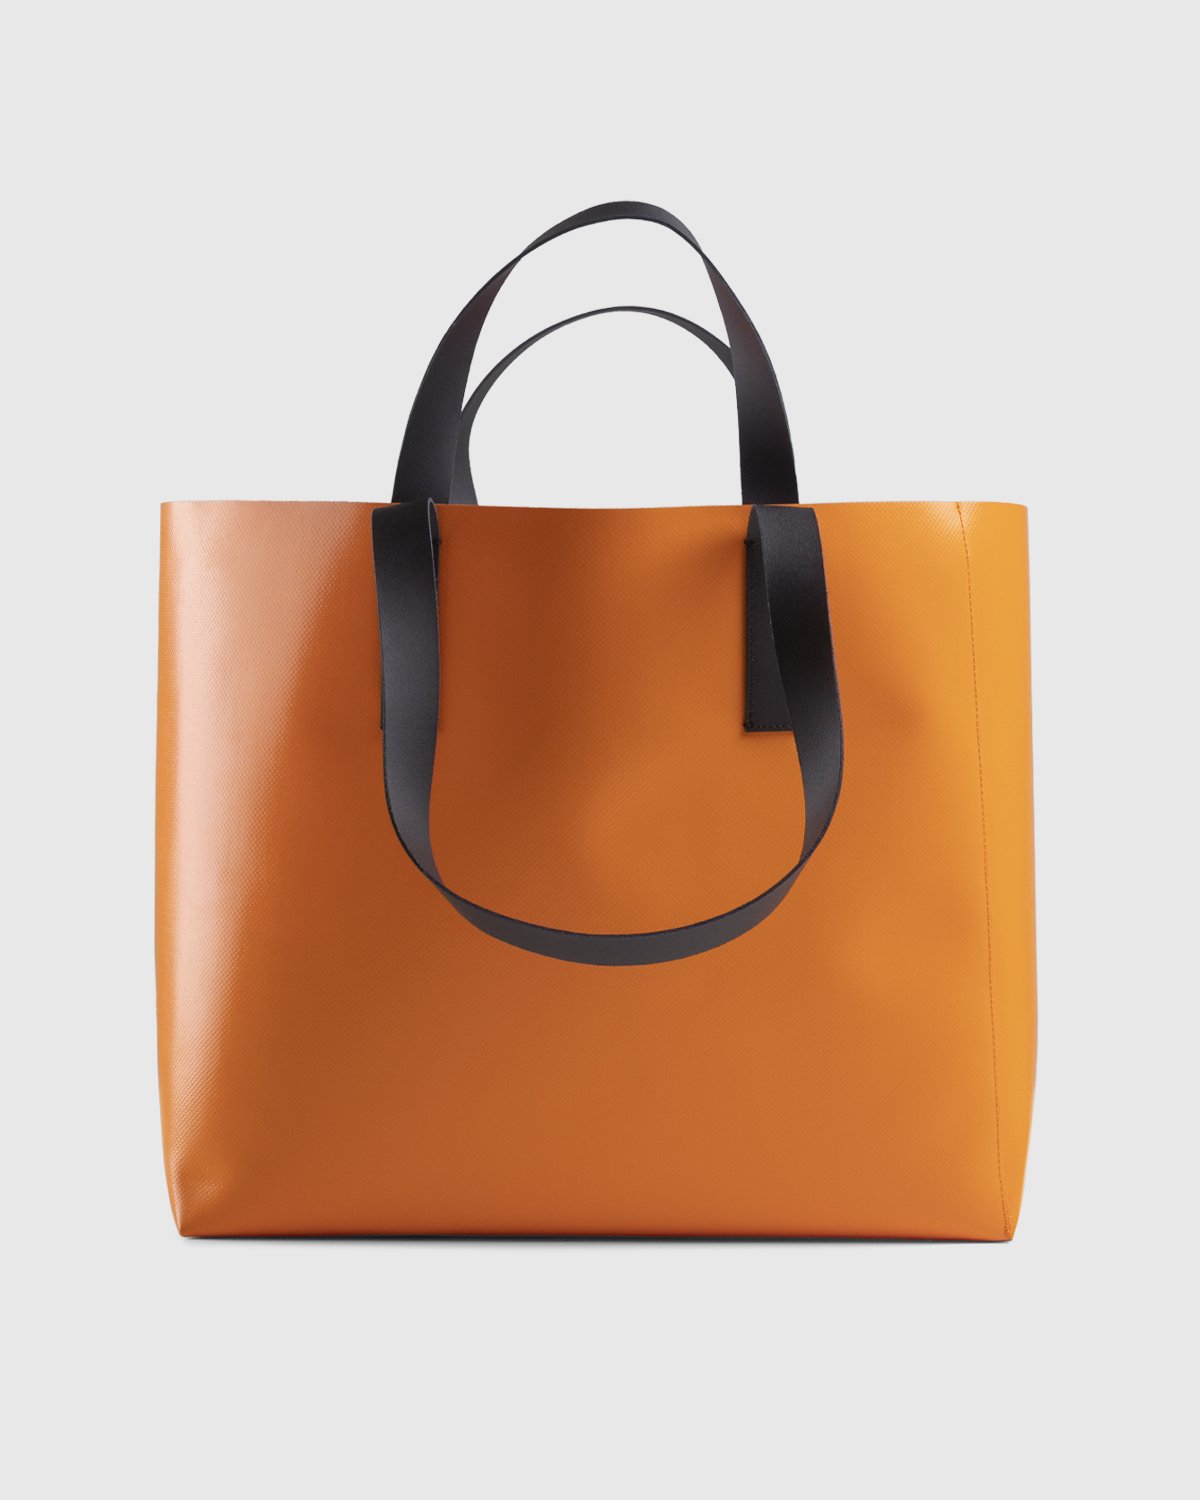 Dries van Noten - Tote Bag Orange - Accessories - Orange - Image 2